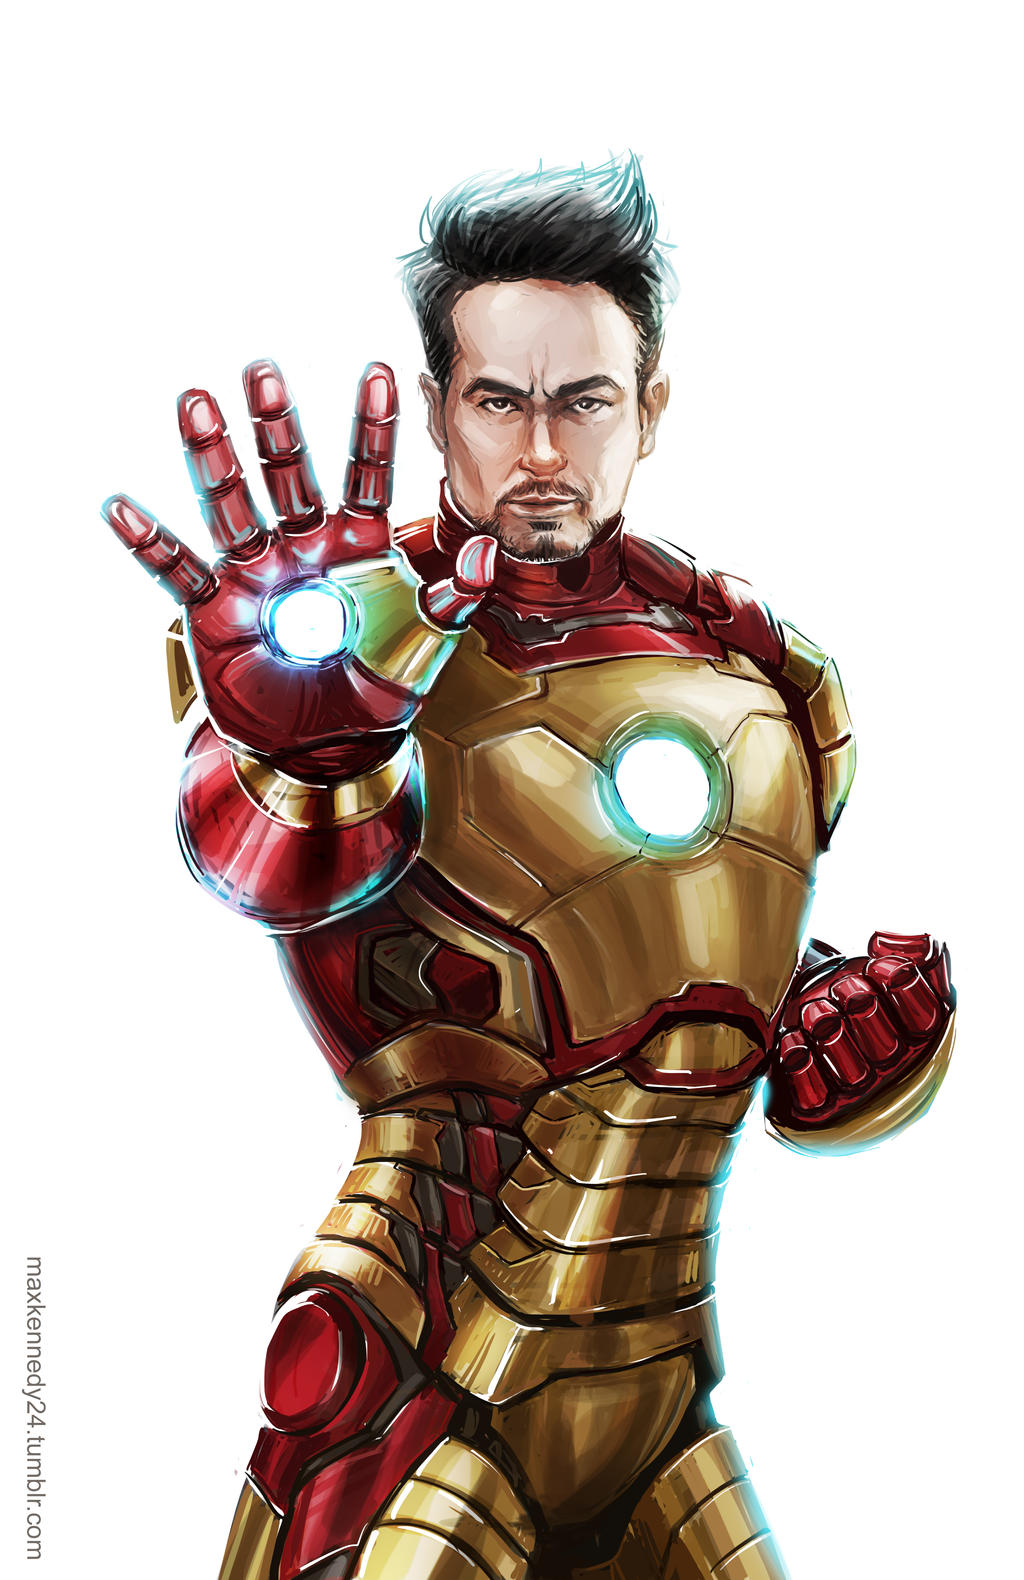 Iron man 3 by maXKennedy on DeviantArt